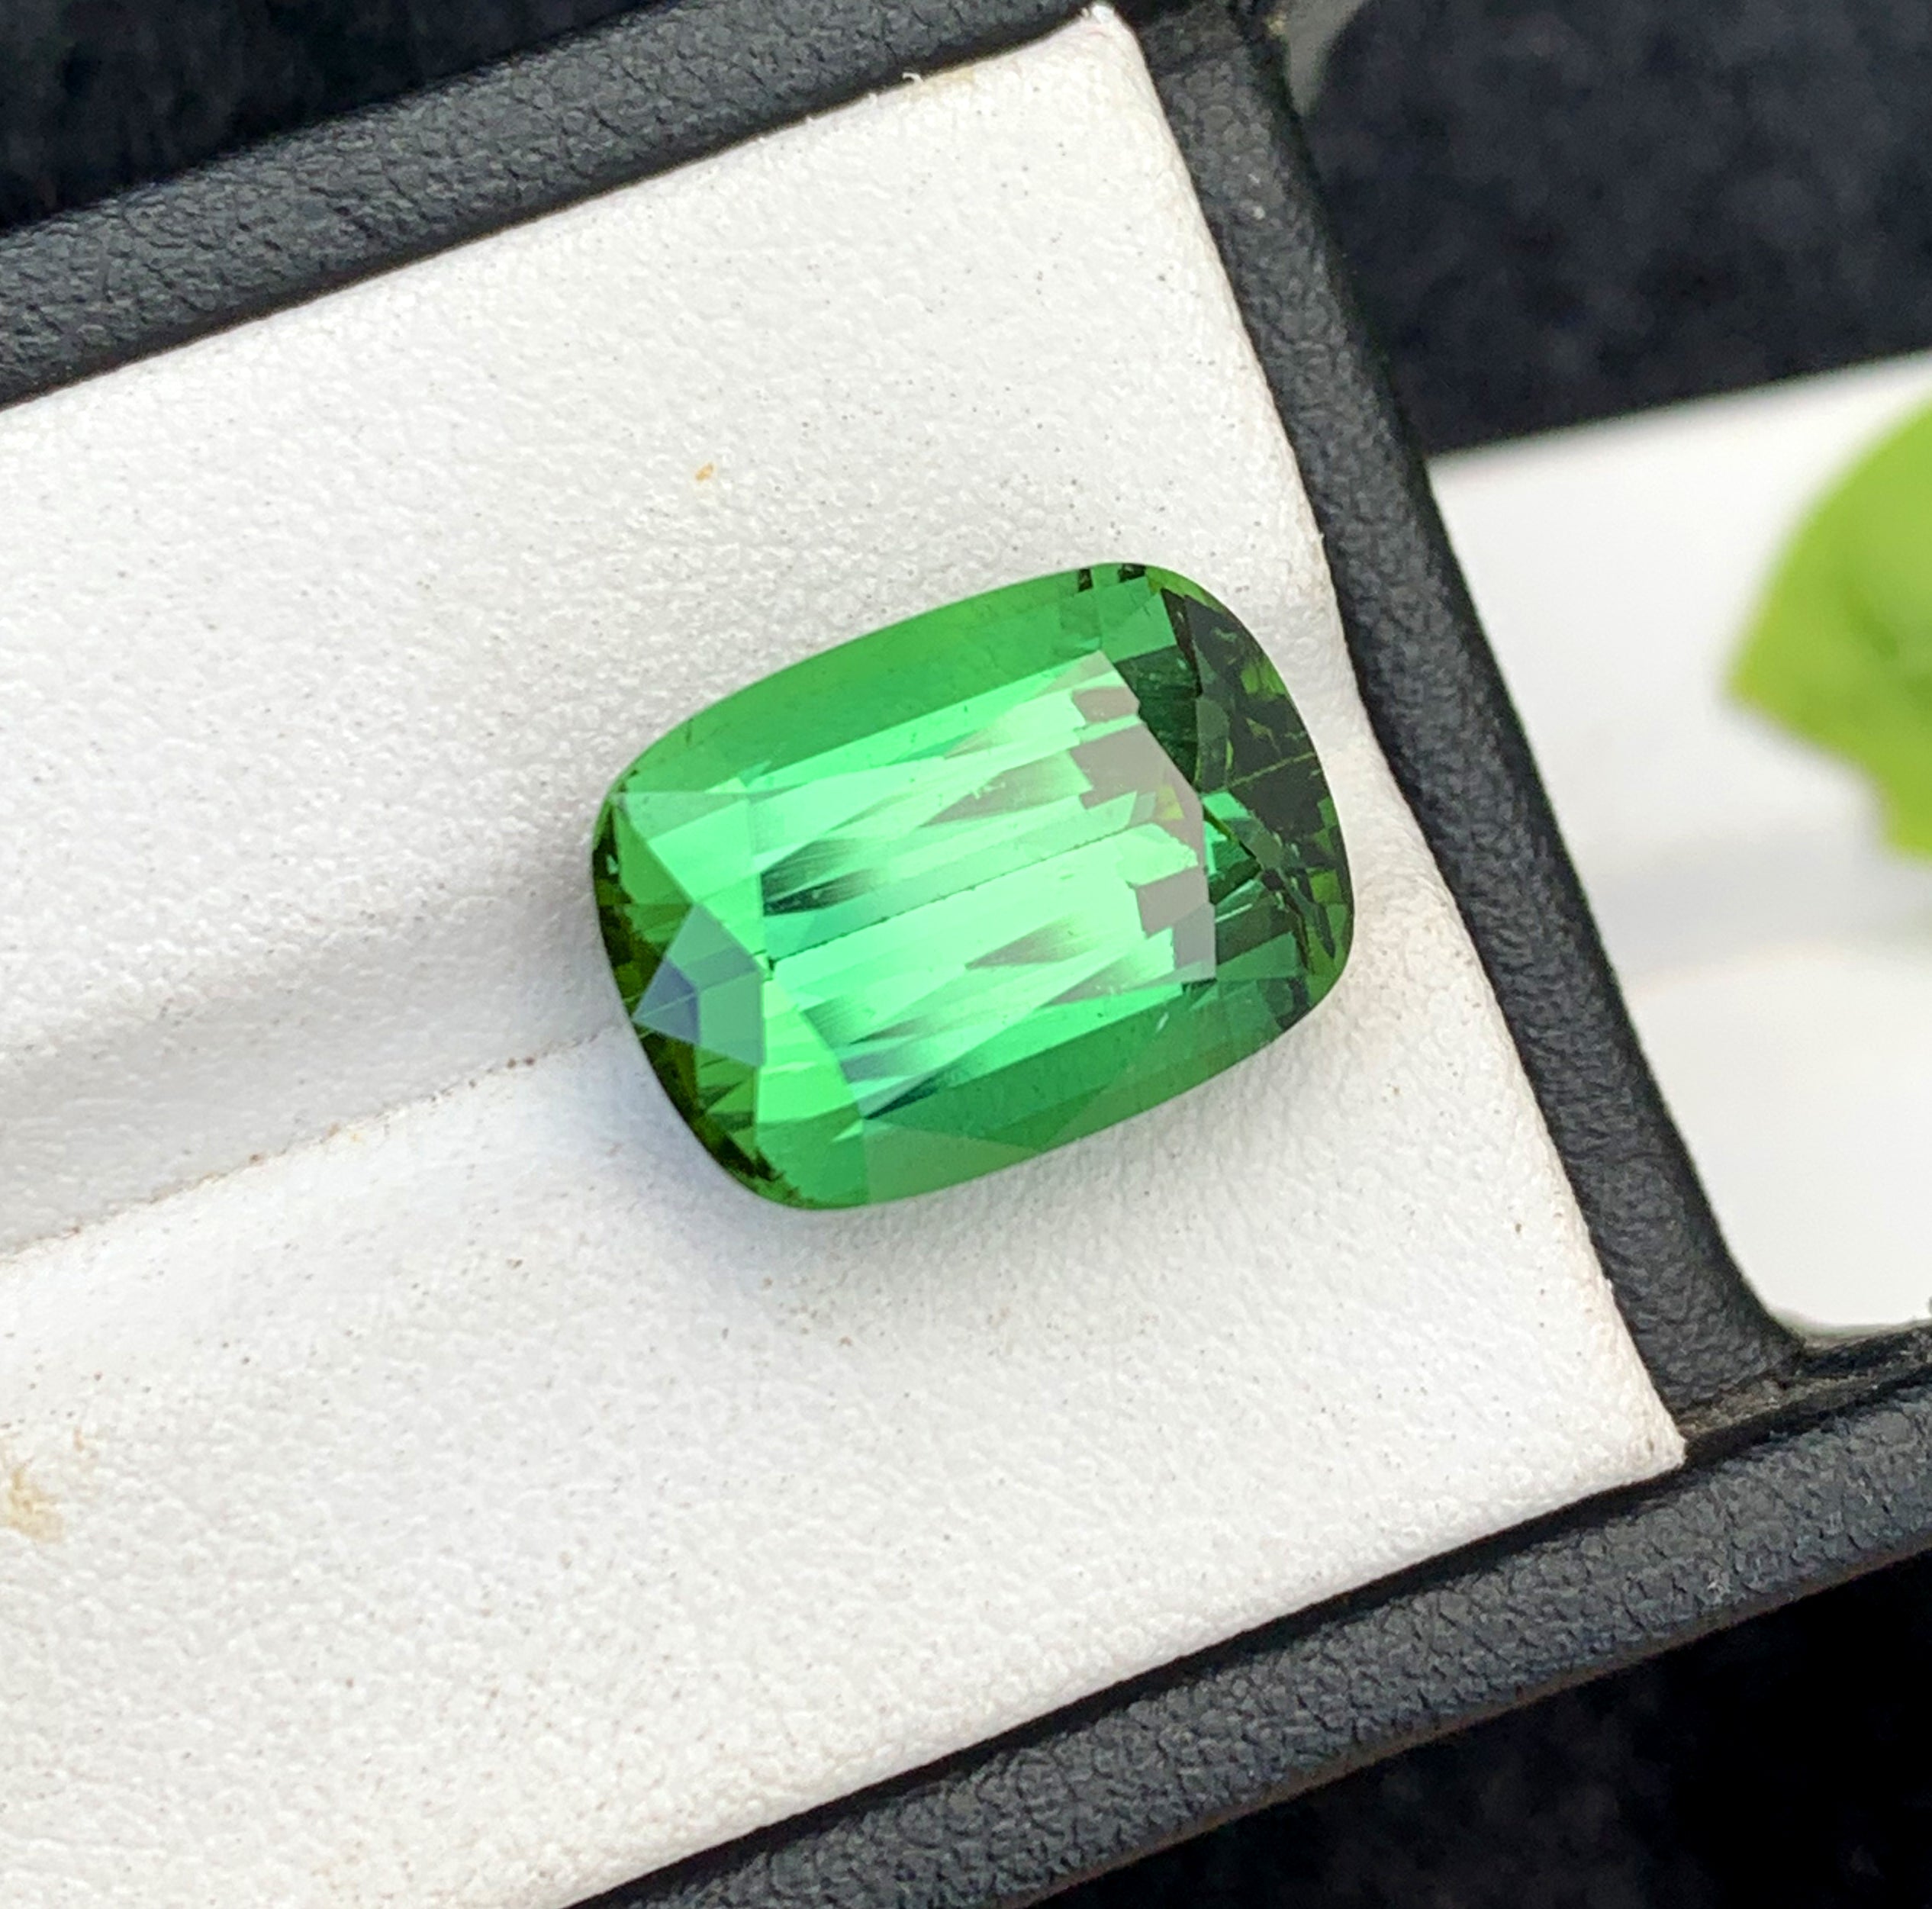 Cusshion Cut Mint Green Tourmaline Gemstone, Loose Gemstone, Tourmaline Ring, Gemstone Jewelry, Afghan Tourmaline - 10.95 CT